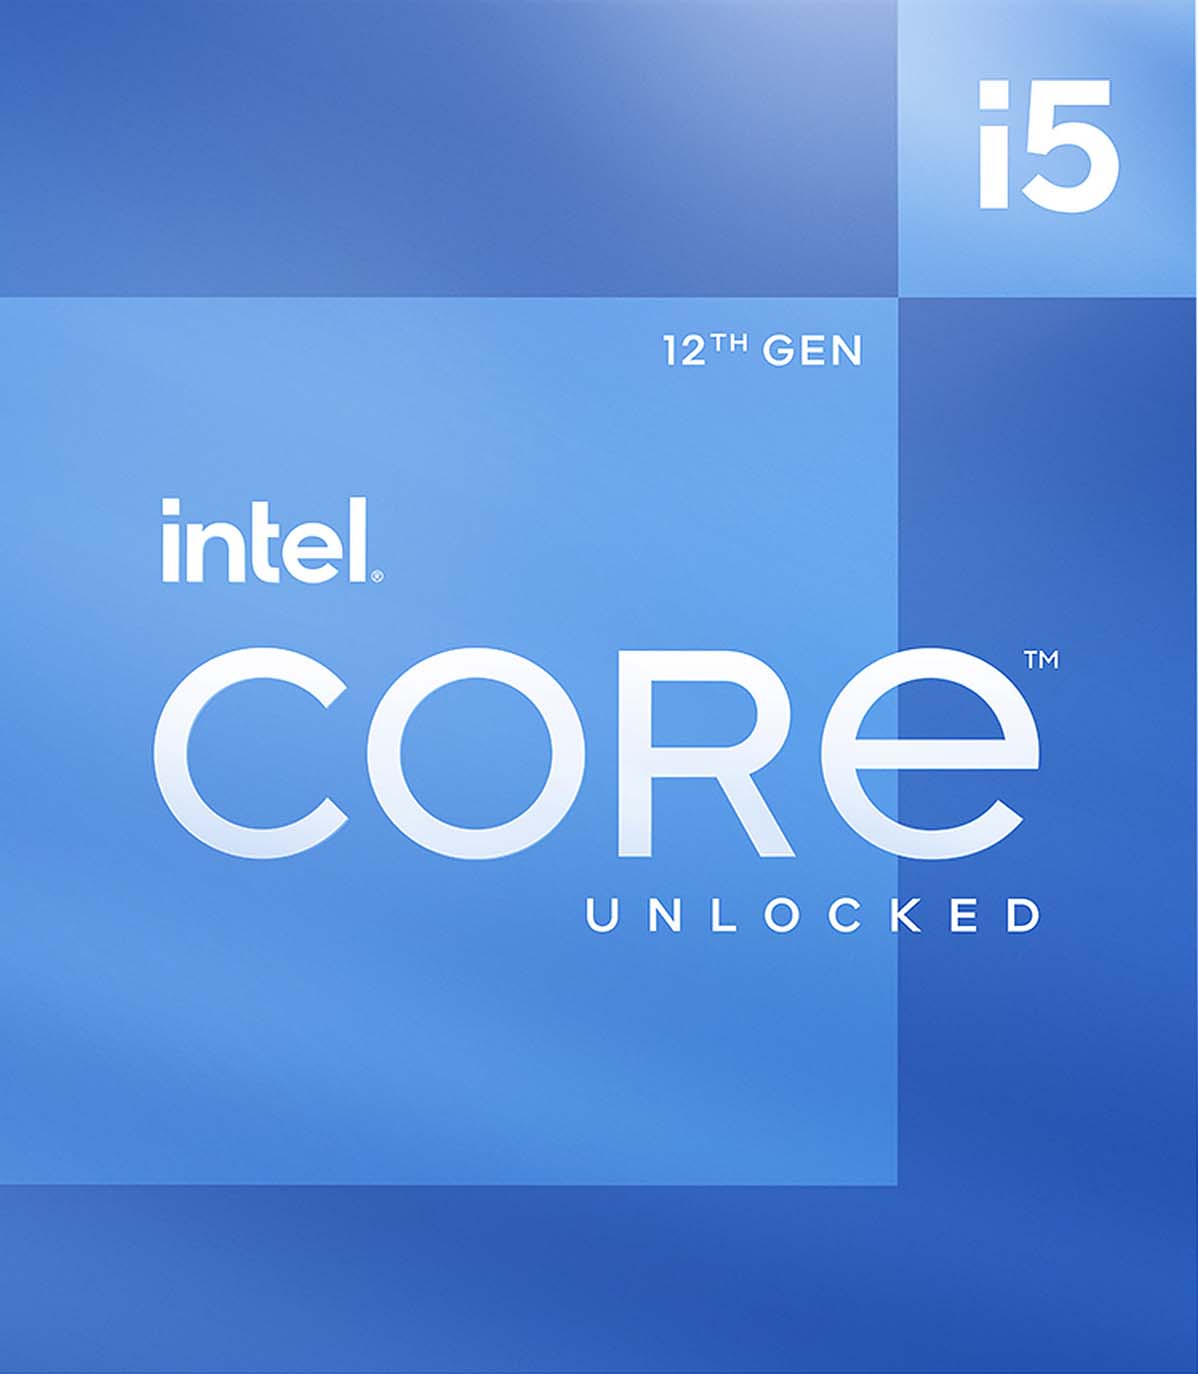 intel-core-i3-12th.jpg